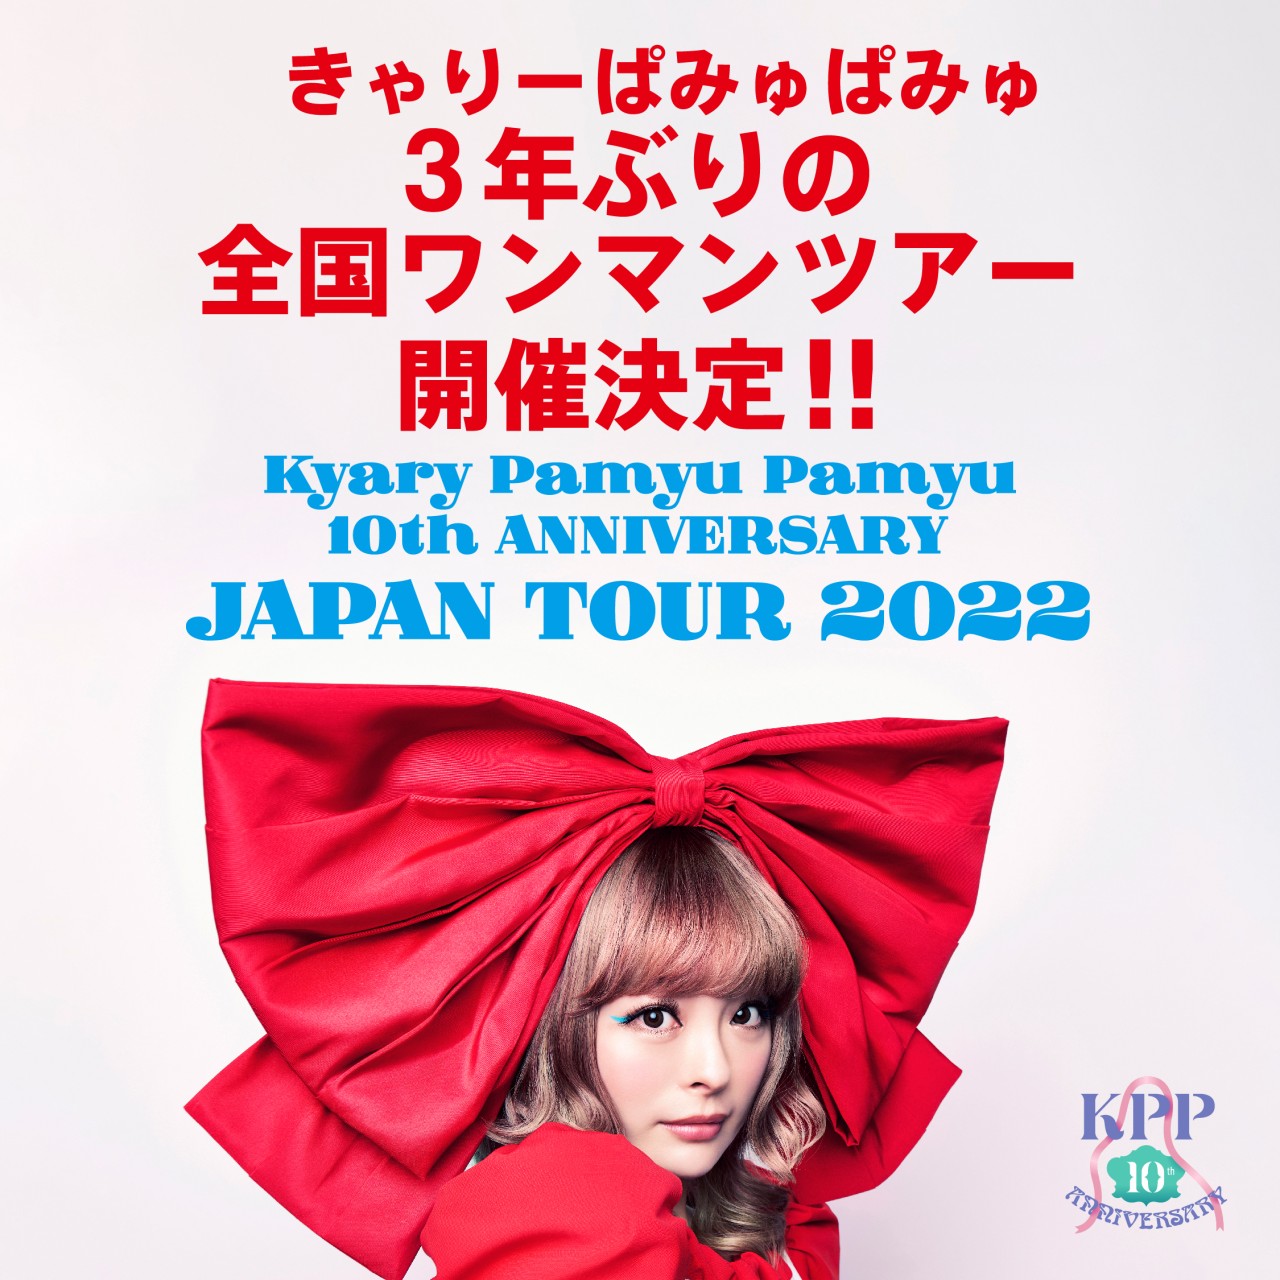 【10th ANNIVERSARY JAPAN TOUR 2022】島根県公演の会場変更について